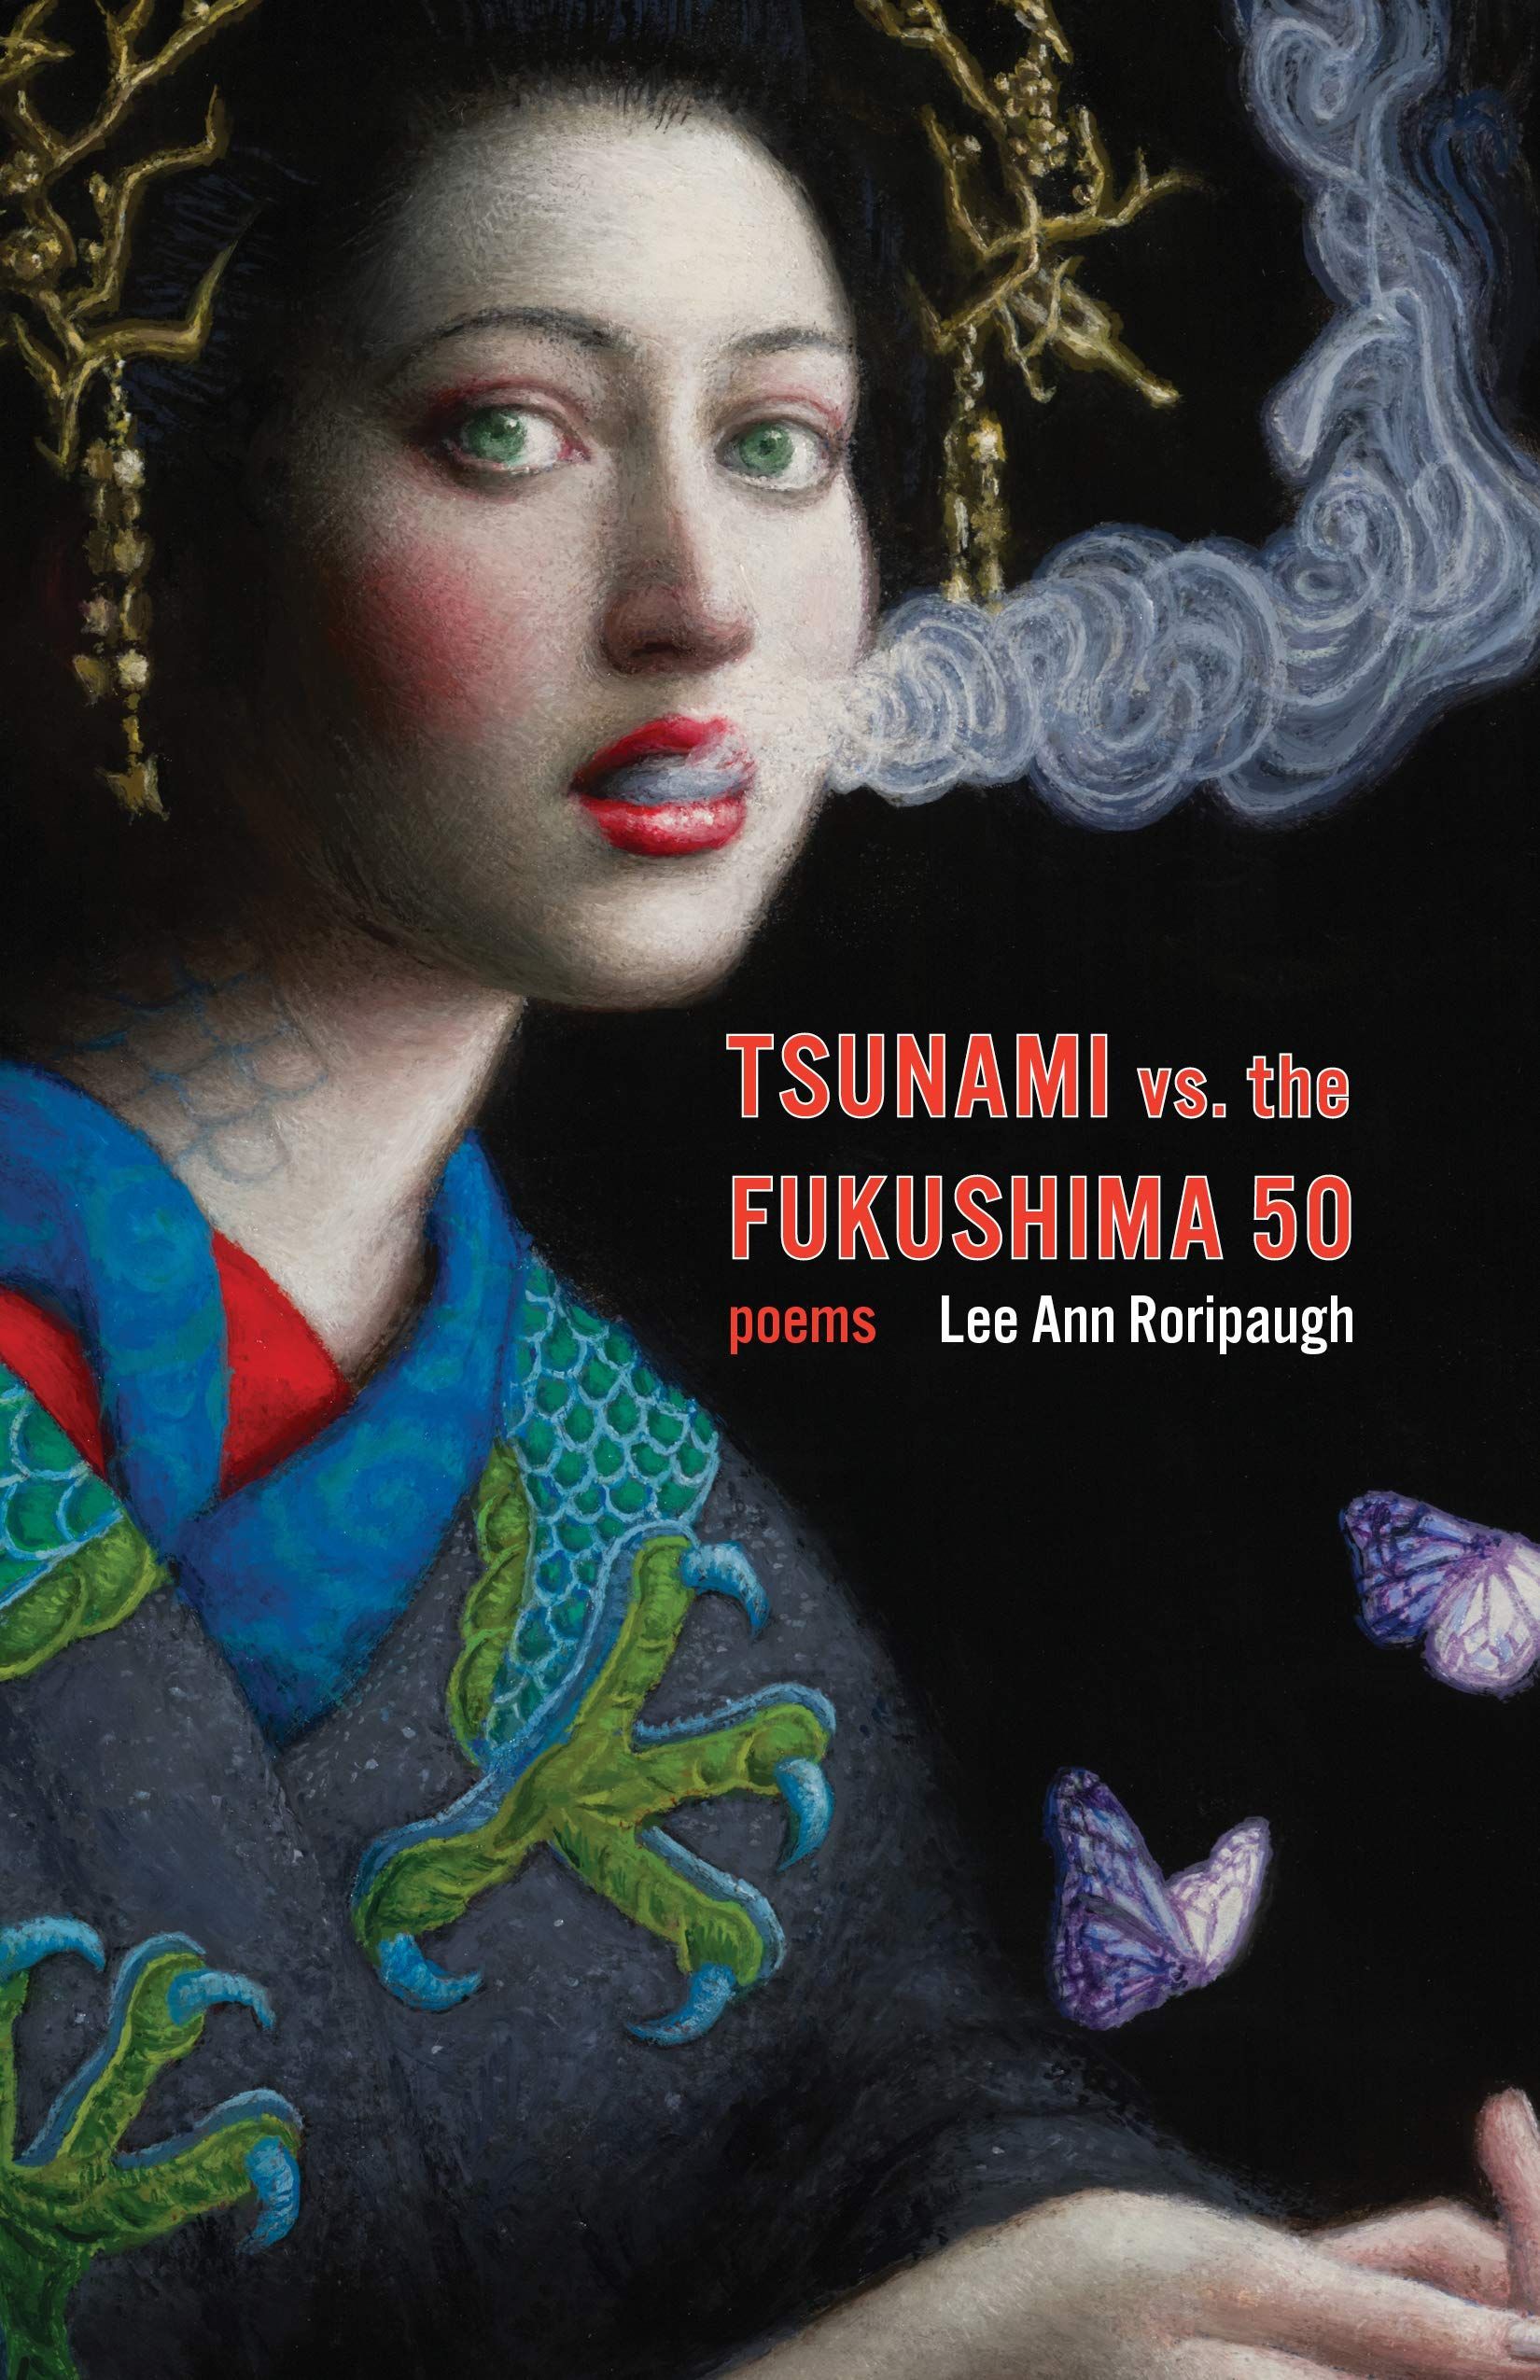 Ghost or Not: On Lee Ann Roripaugh’s “tsunami vs. the fukushima 50”